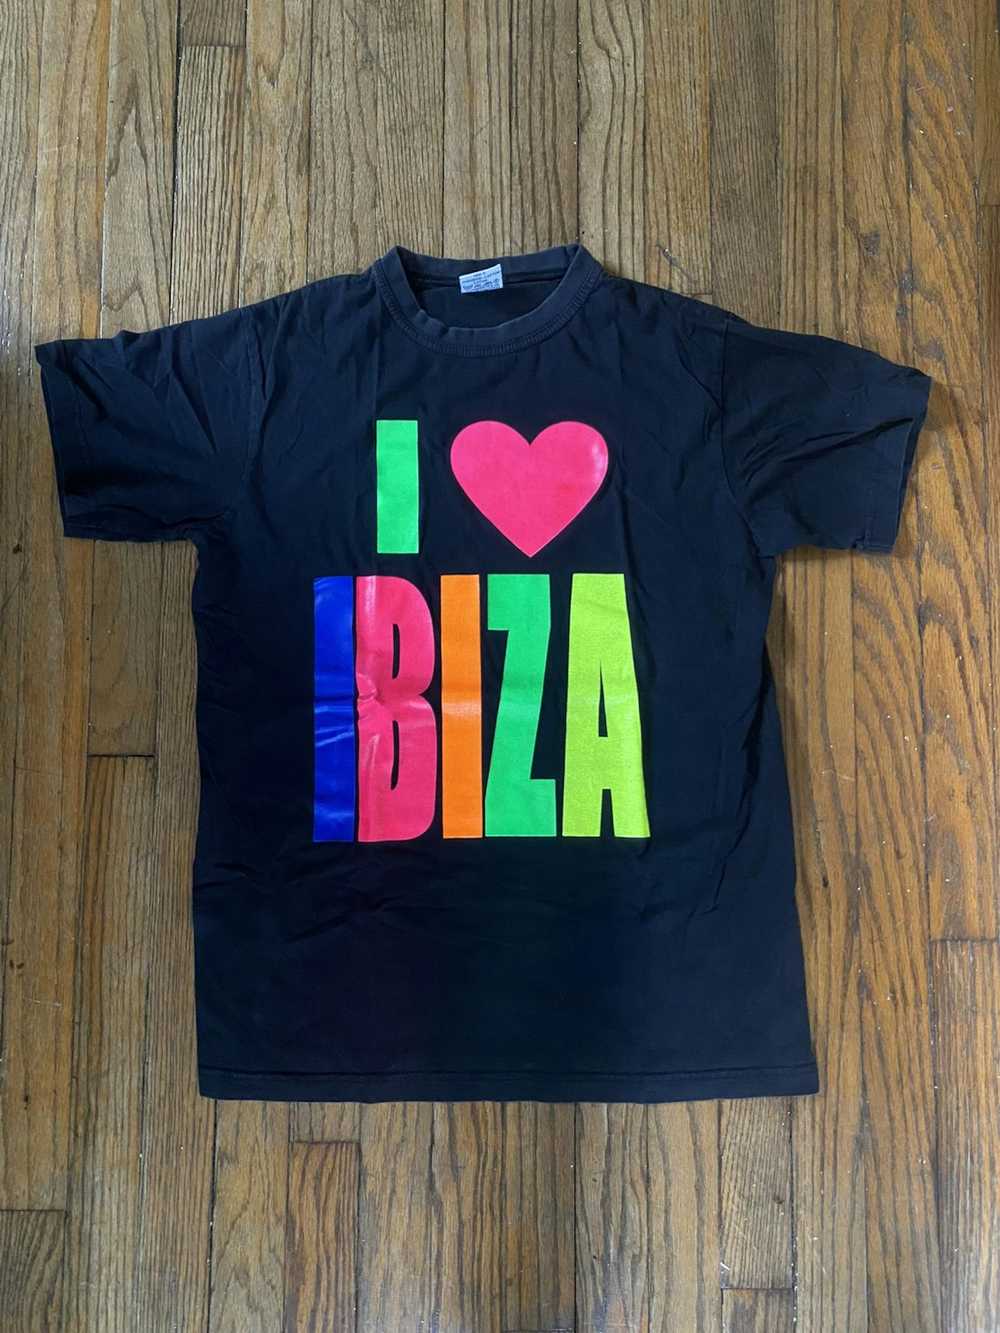 Vintage 2000s “i heart ibiza” tshirt - image 1